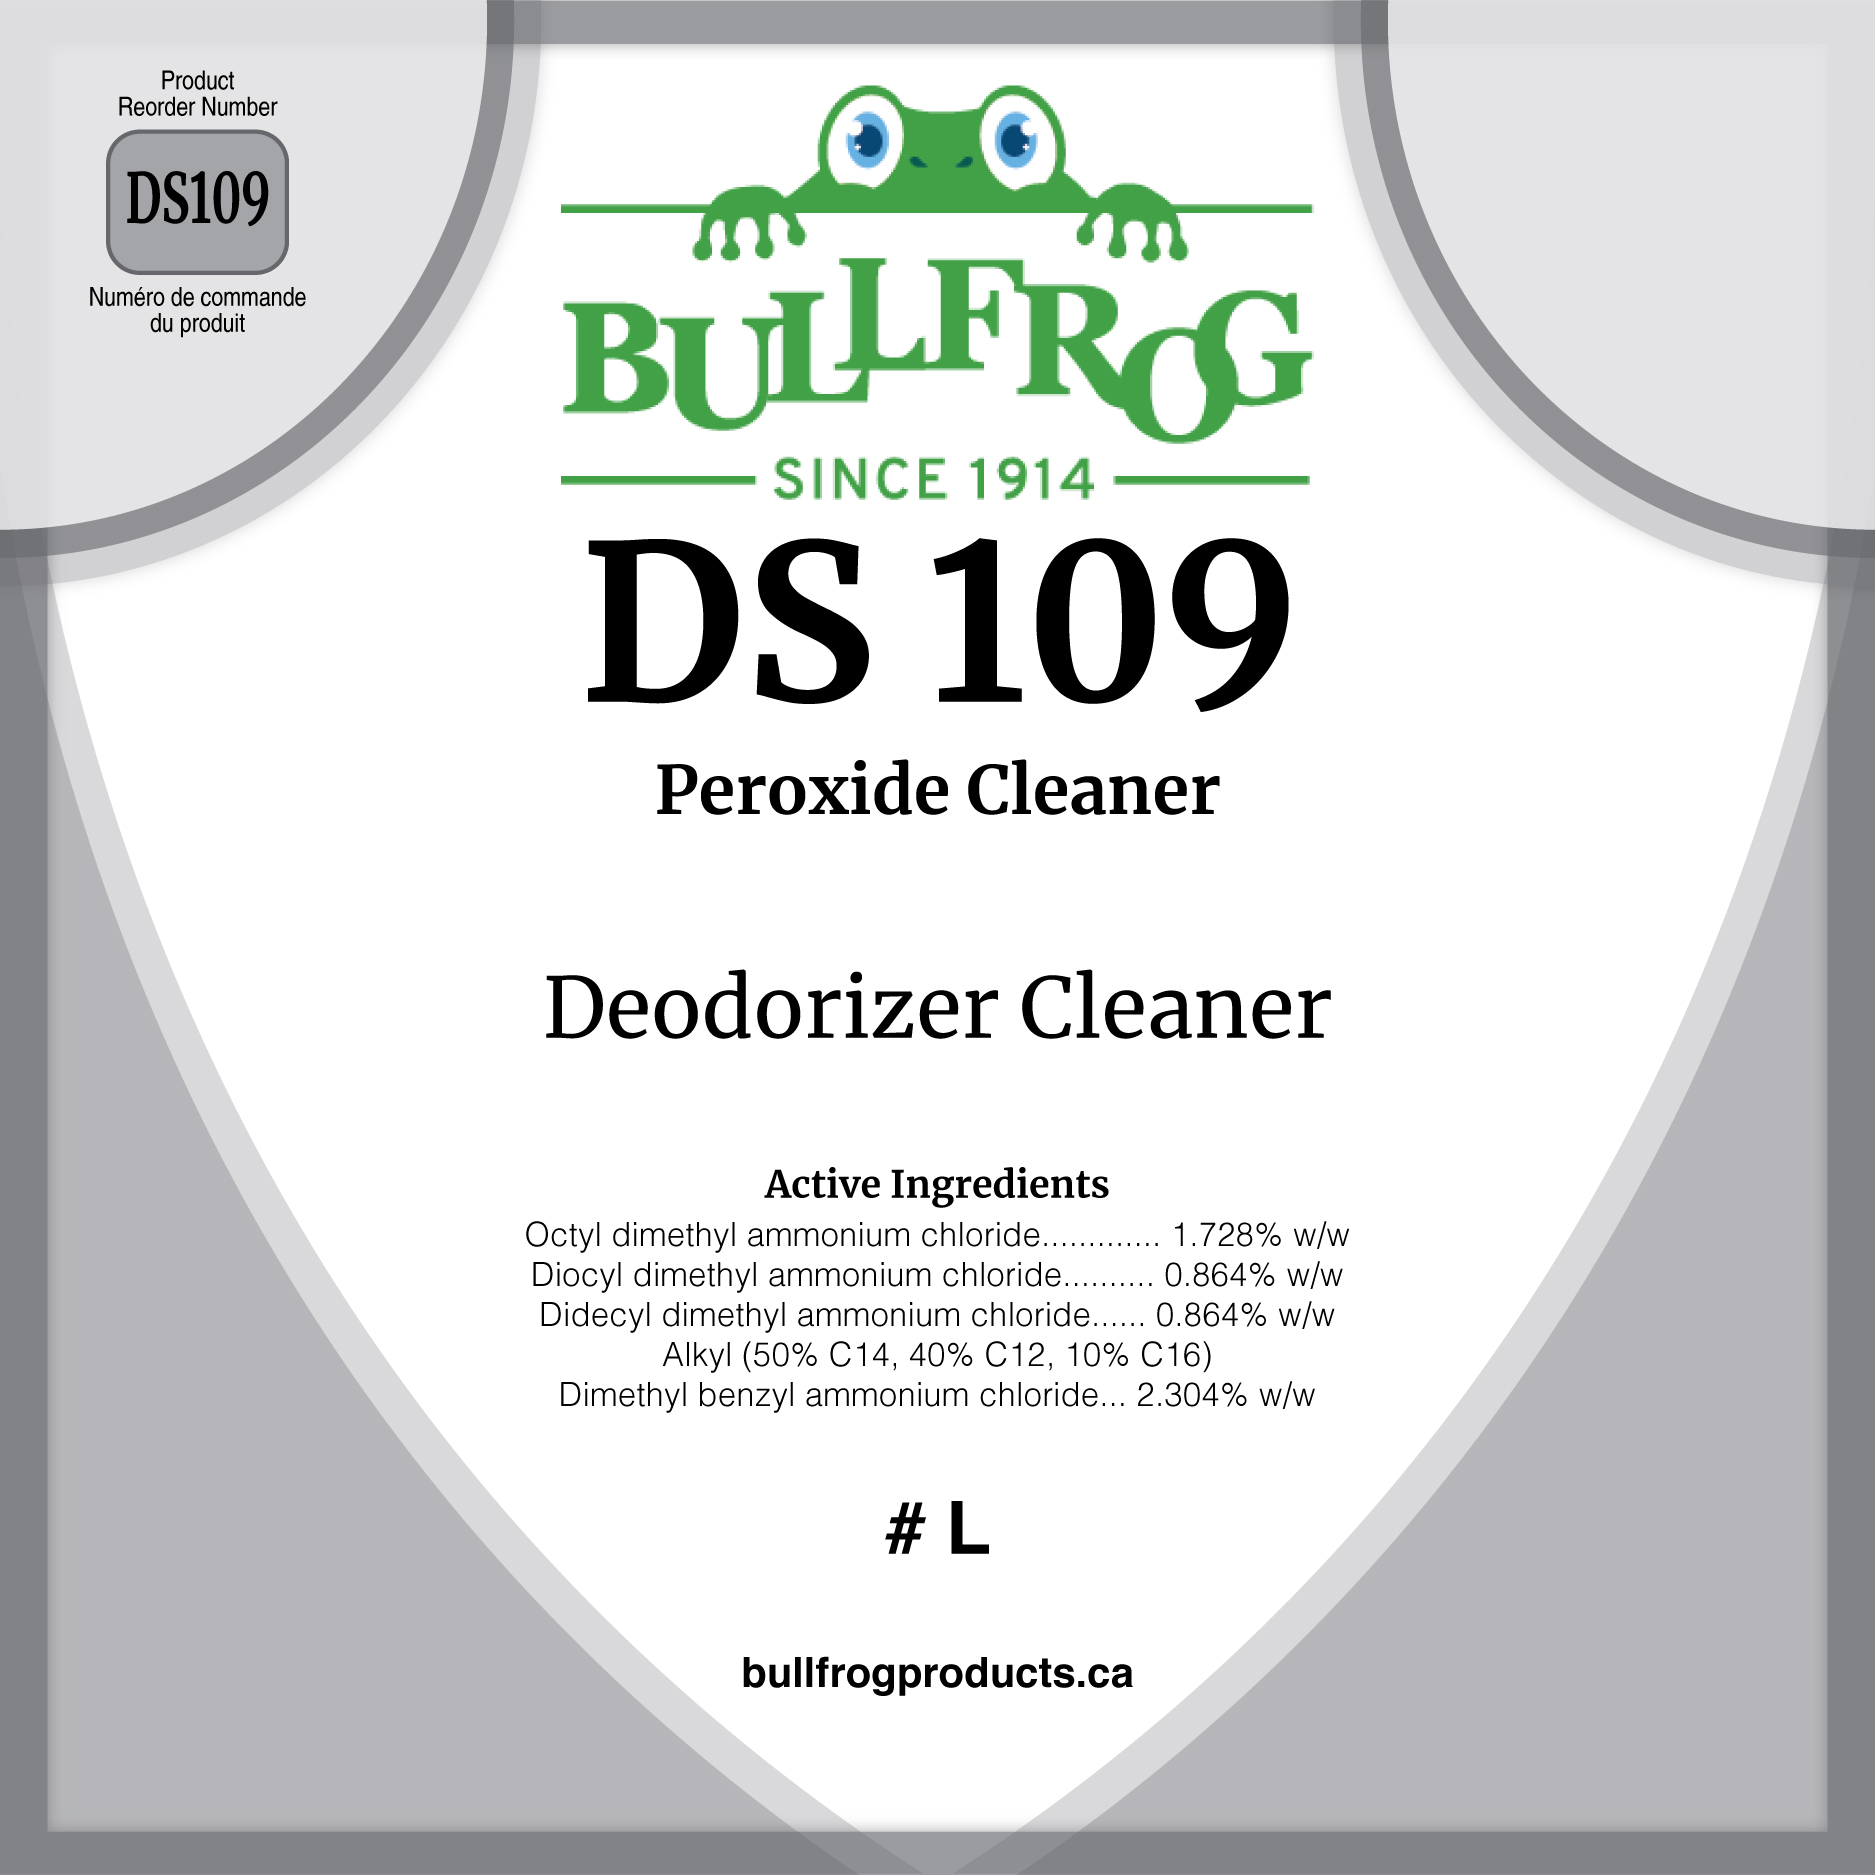 DS 109 front label image